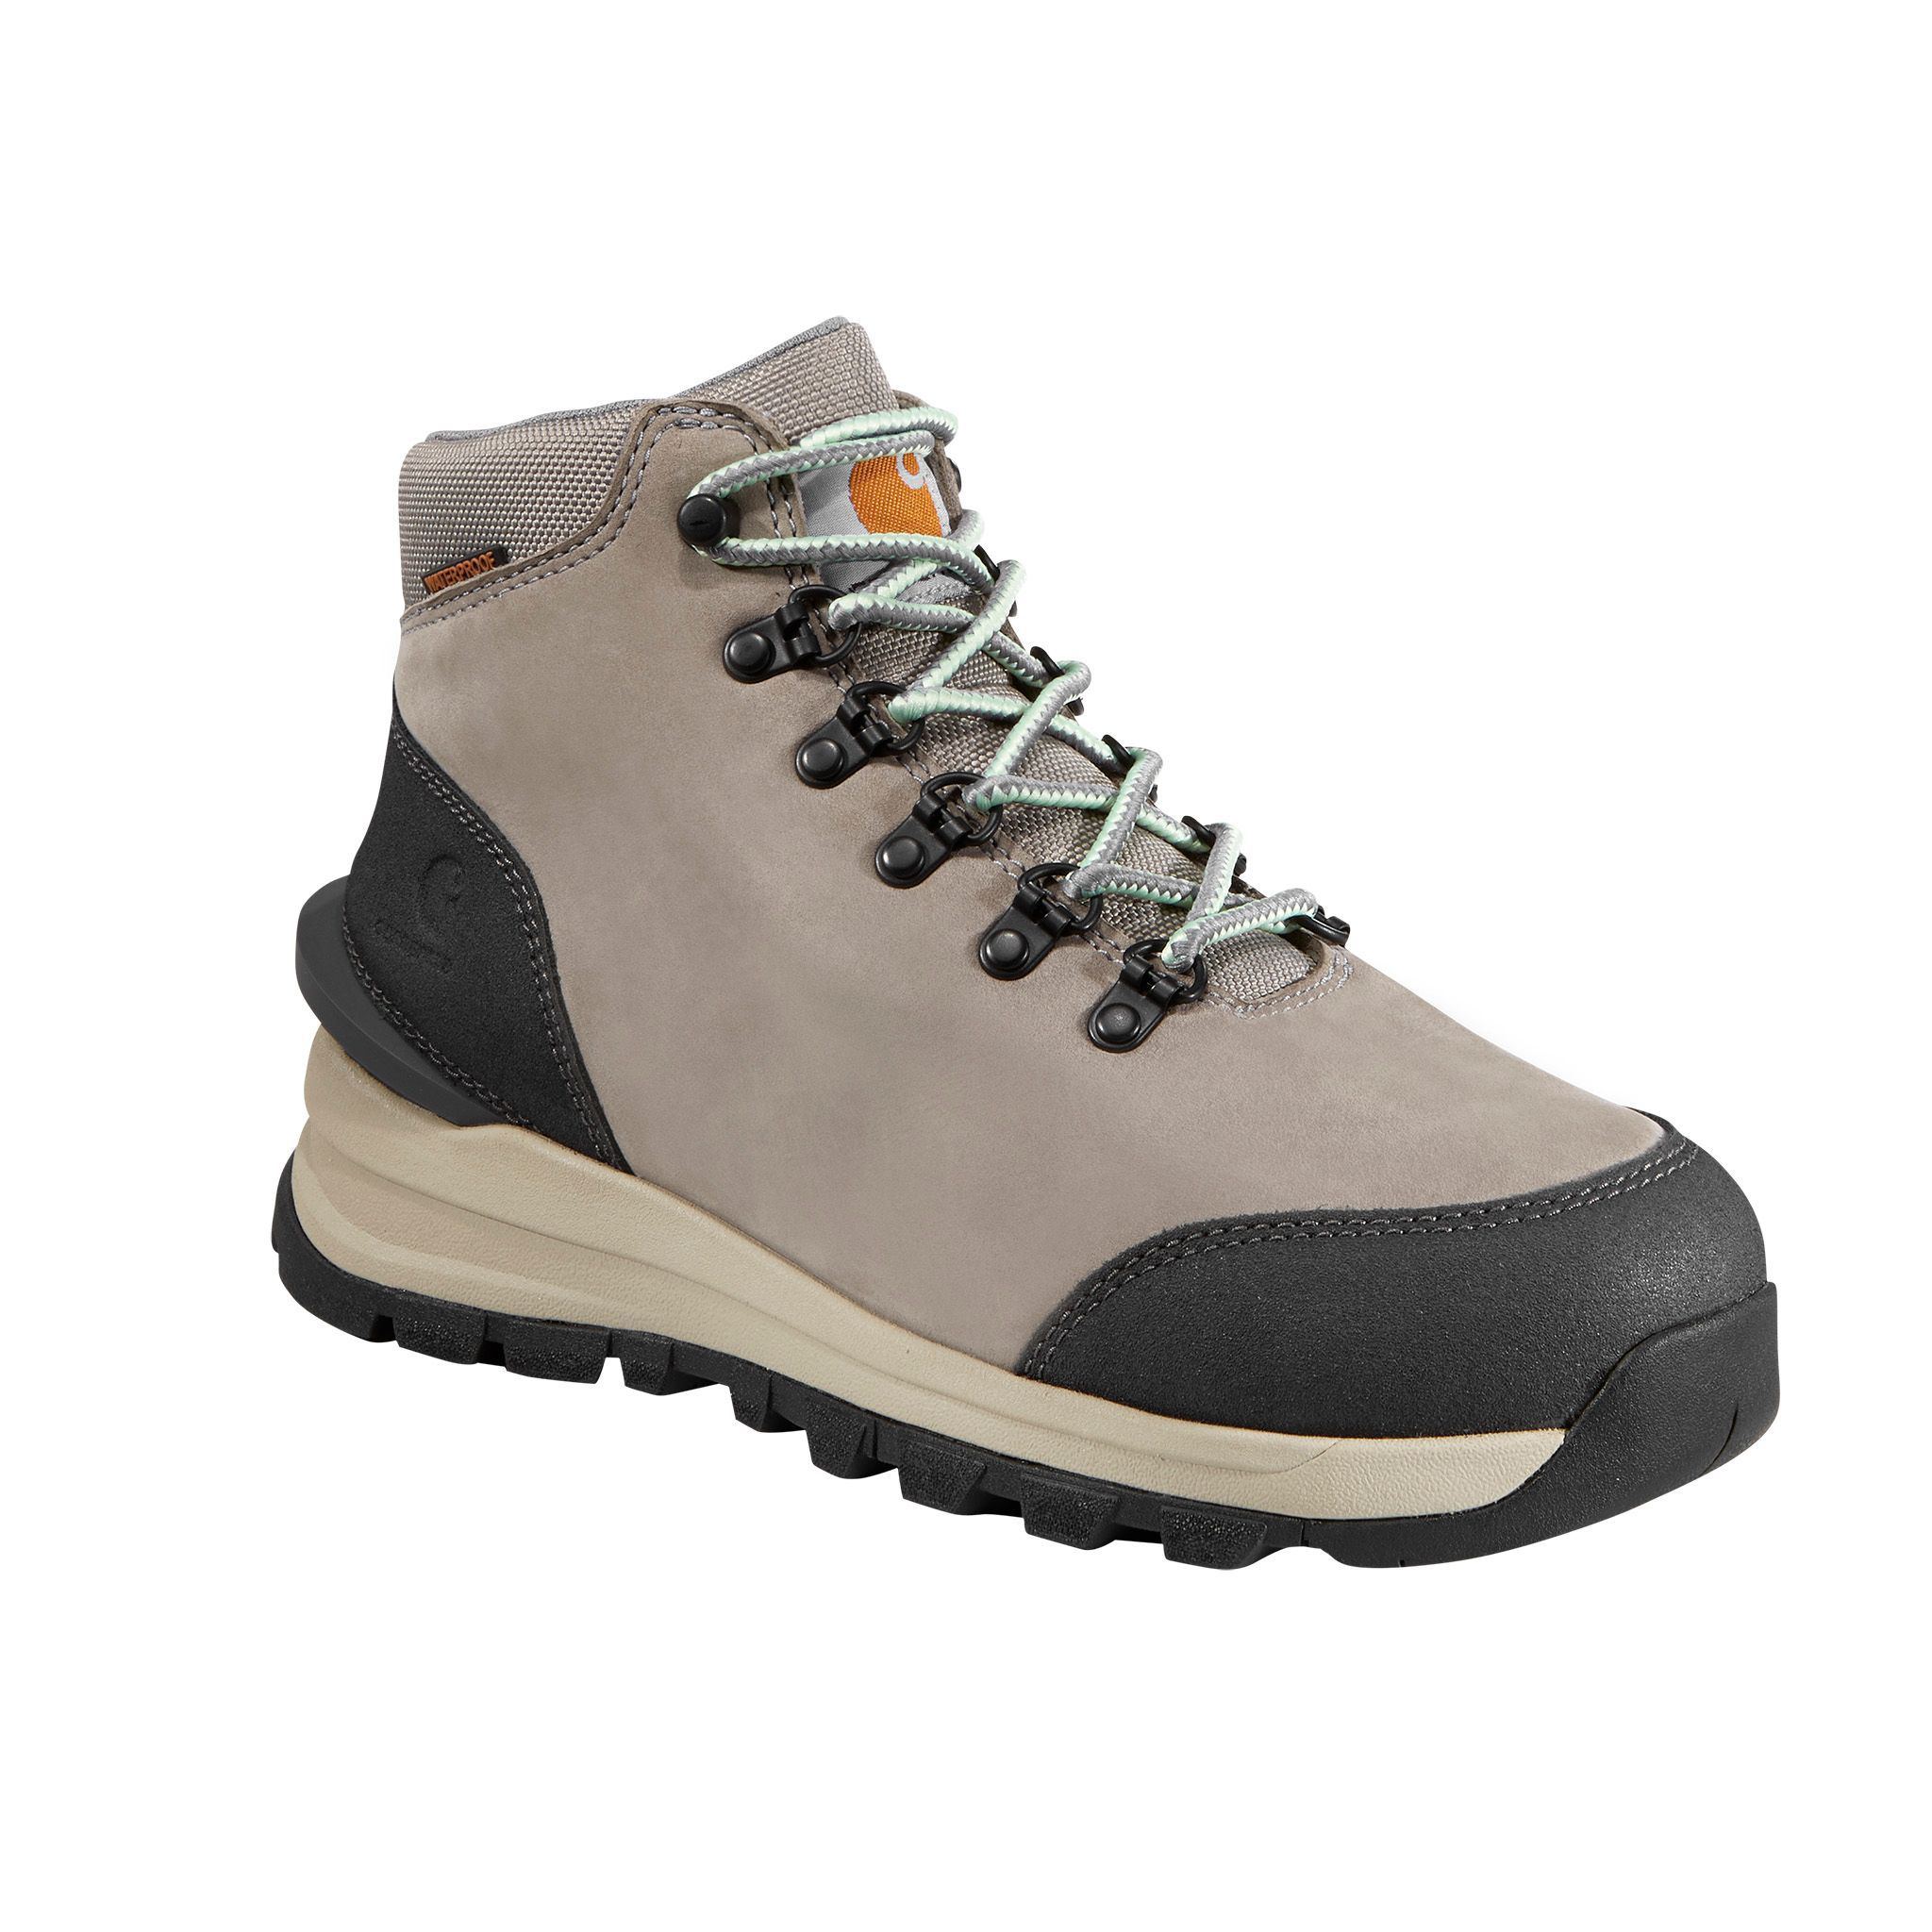 Carhartt Gilmore Waterproof Hiking Boots for Ladies - Grey Nubuck - 7M